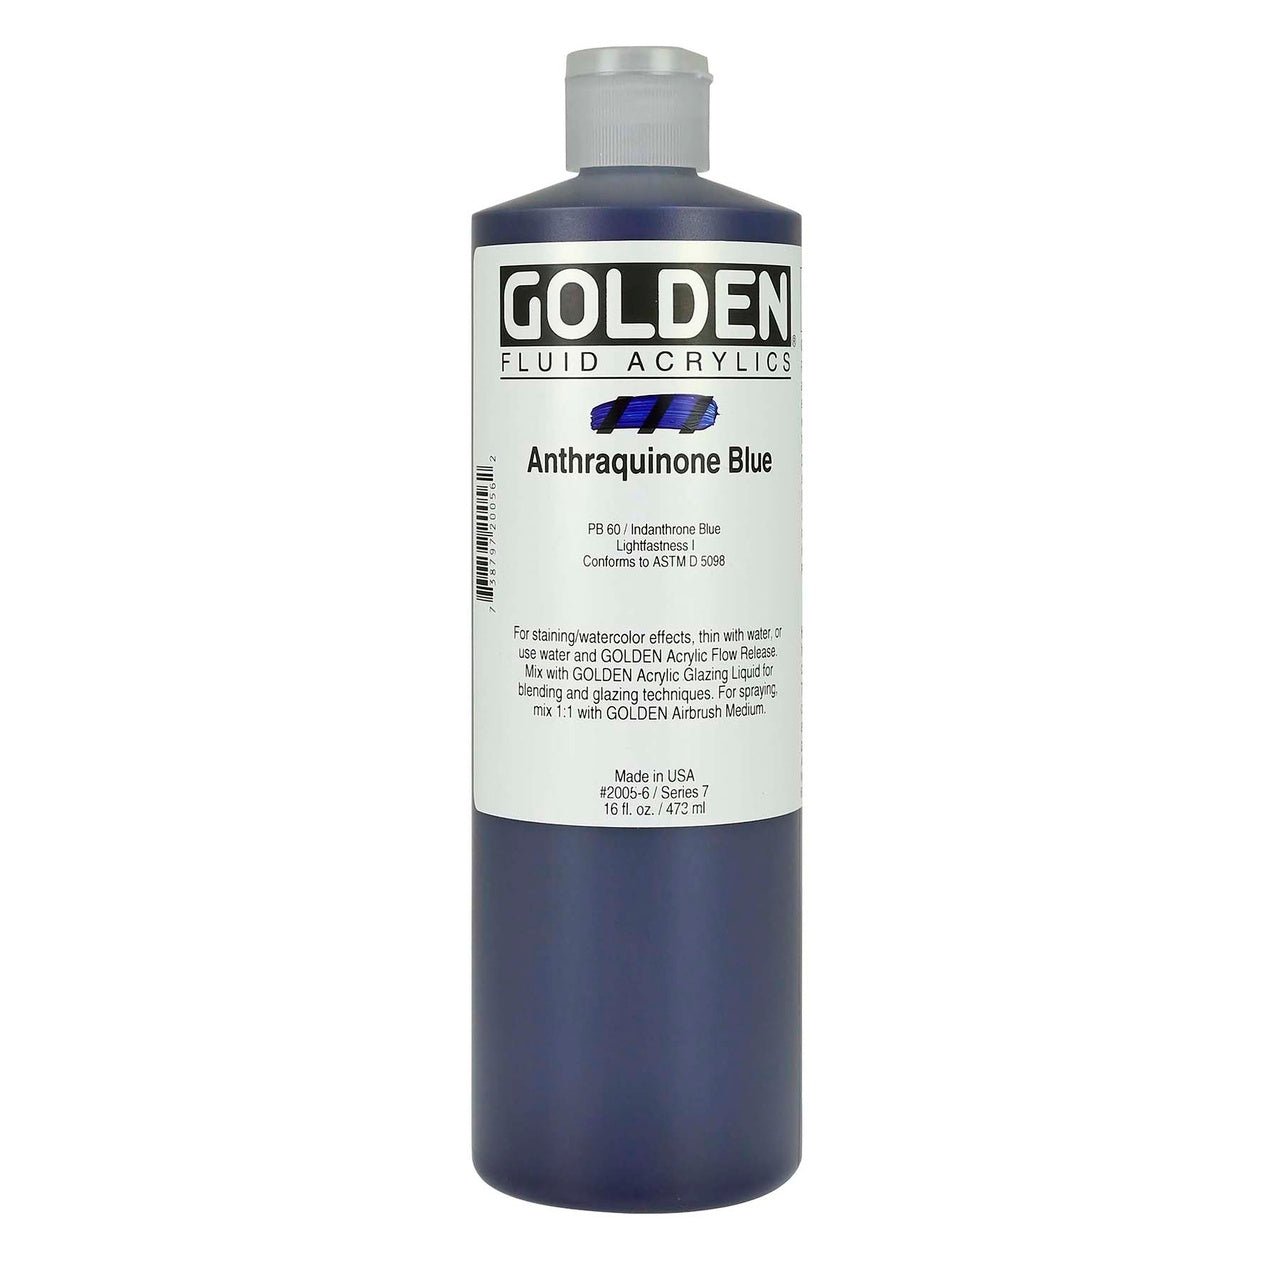 Golden Fluid Acrylic Anthraquinone Blue 16 oz - merriartist.com